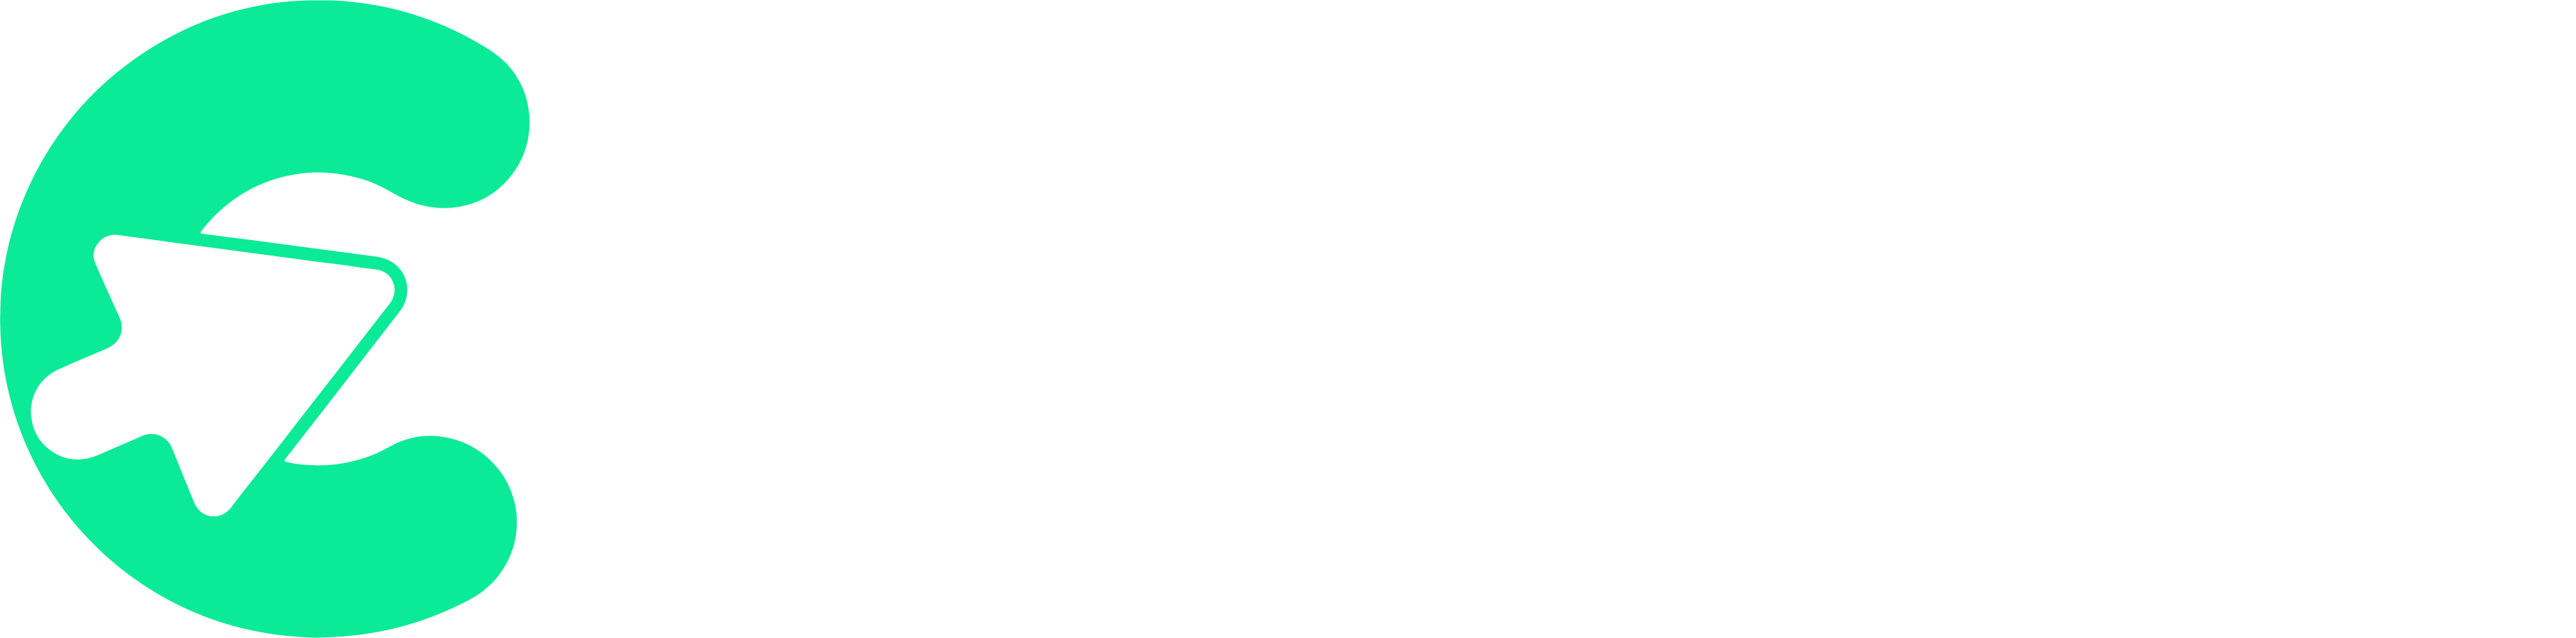 Cayweb